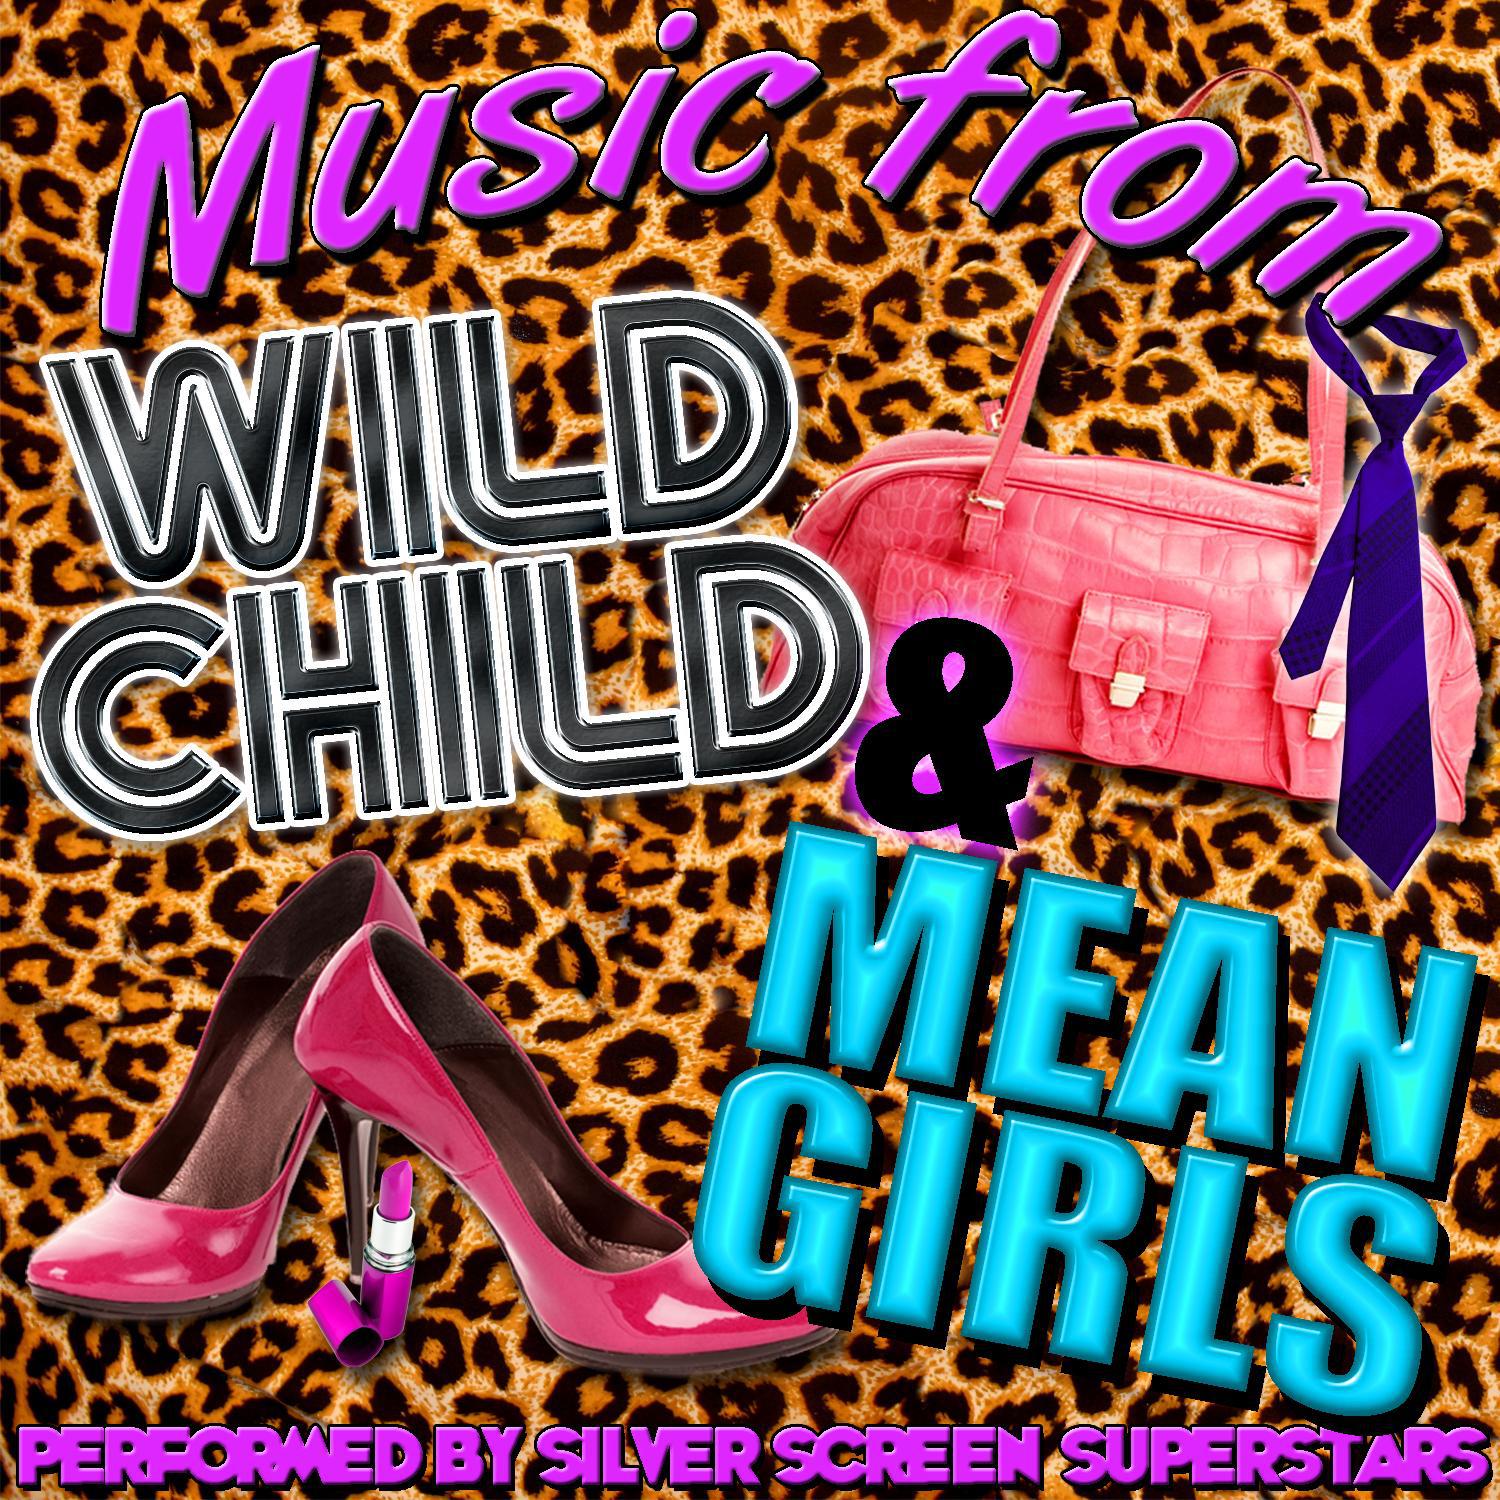 Music from Wild Child & Mean Girls